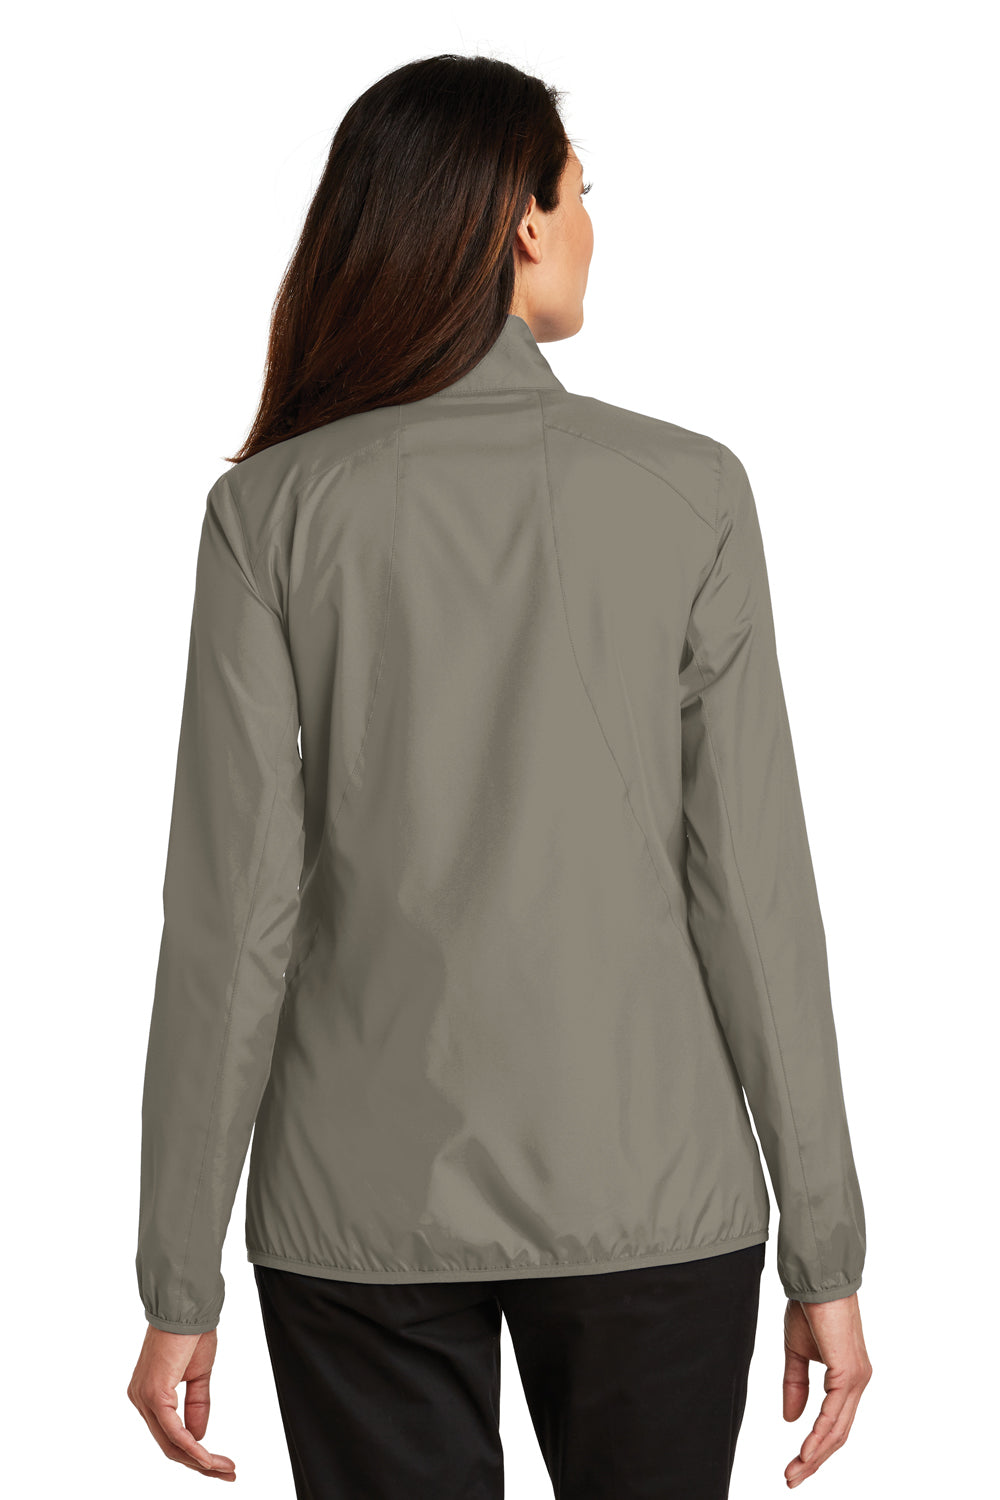 Port Authority L344 Womens Zephyr Wind & Water Resistant Full Zip Jacket Stratus Grey Back